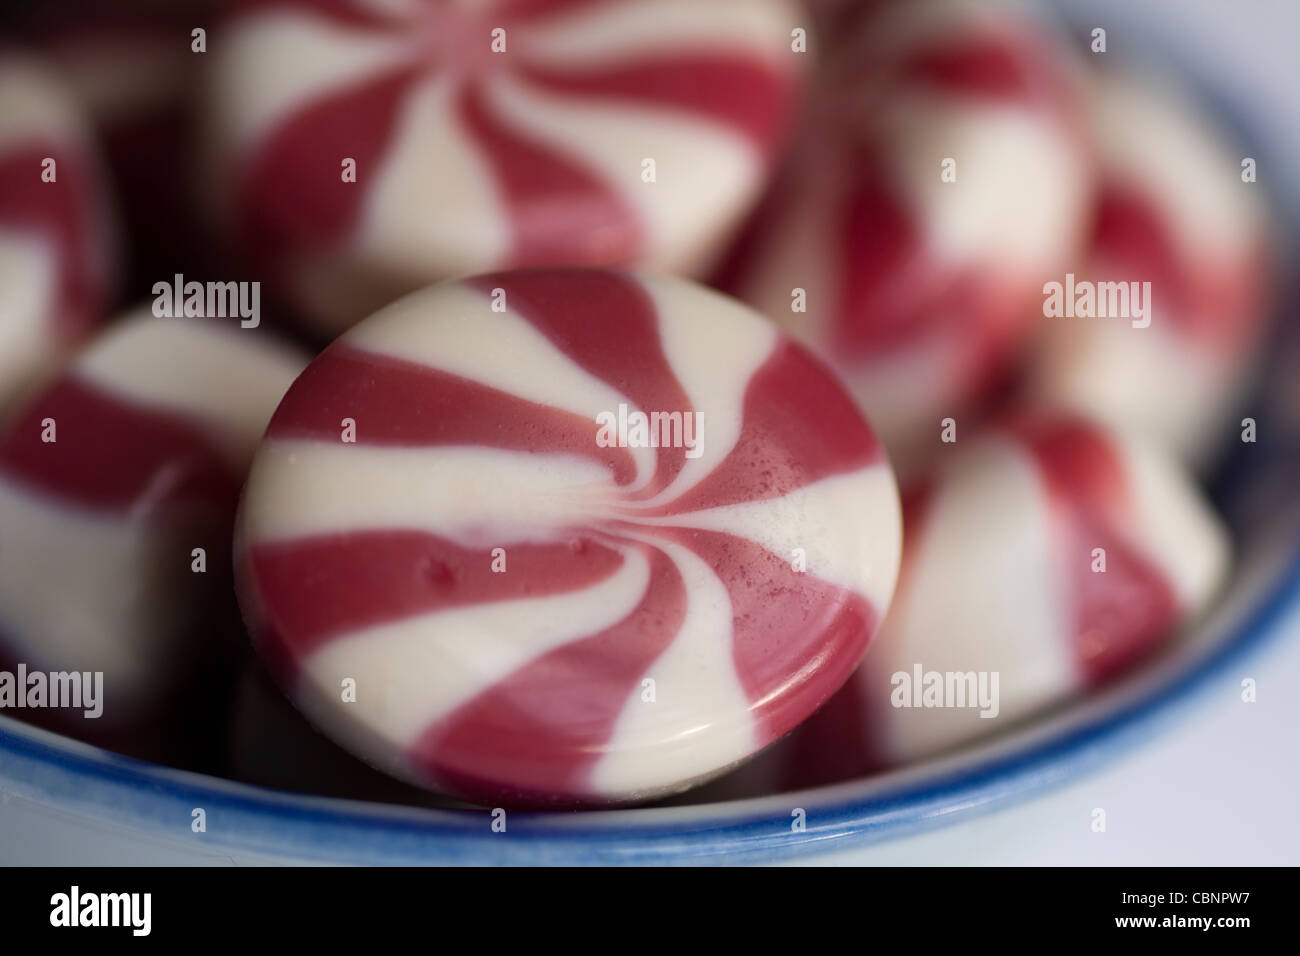 Erdbeerbonbons -Fotos und -Bildmaterial in hoher Auflösung – Alamy